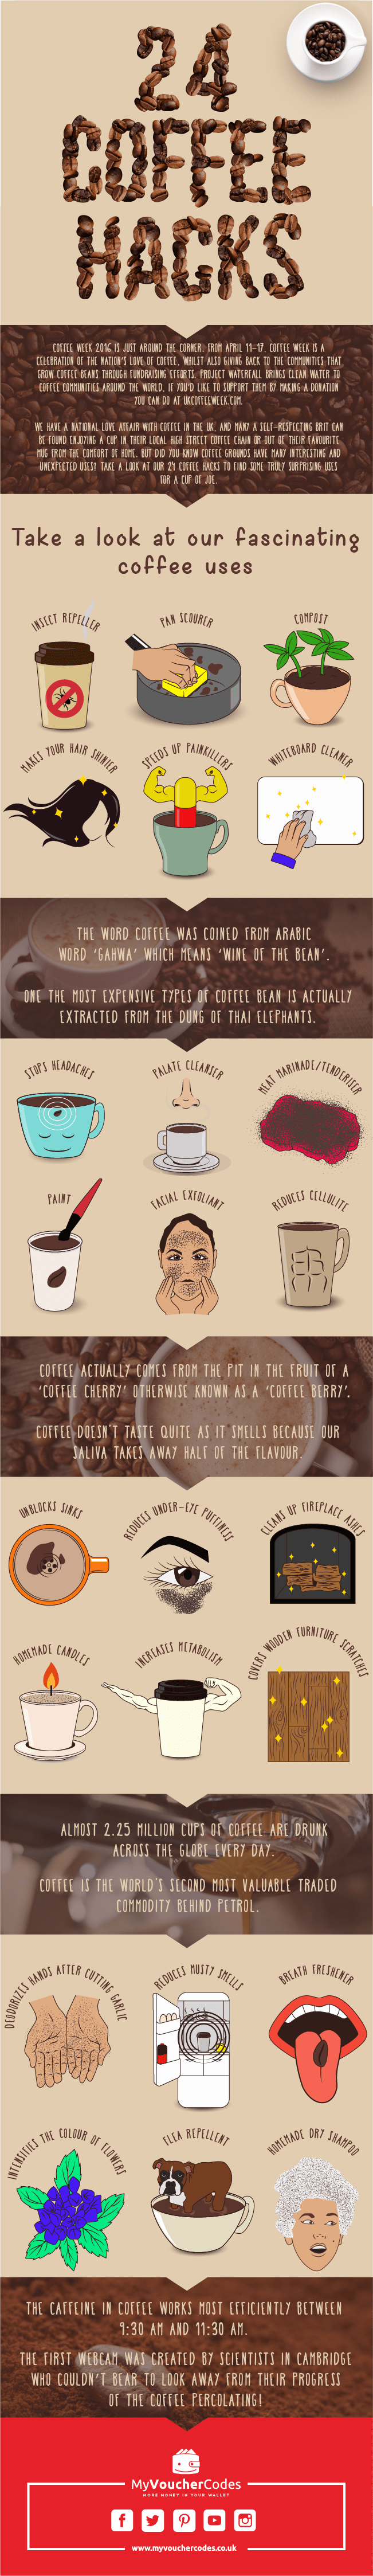 Coffee Hacks infographic